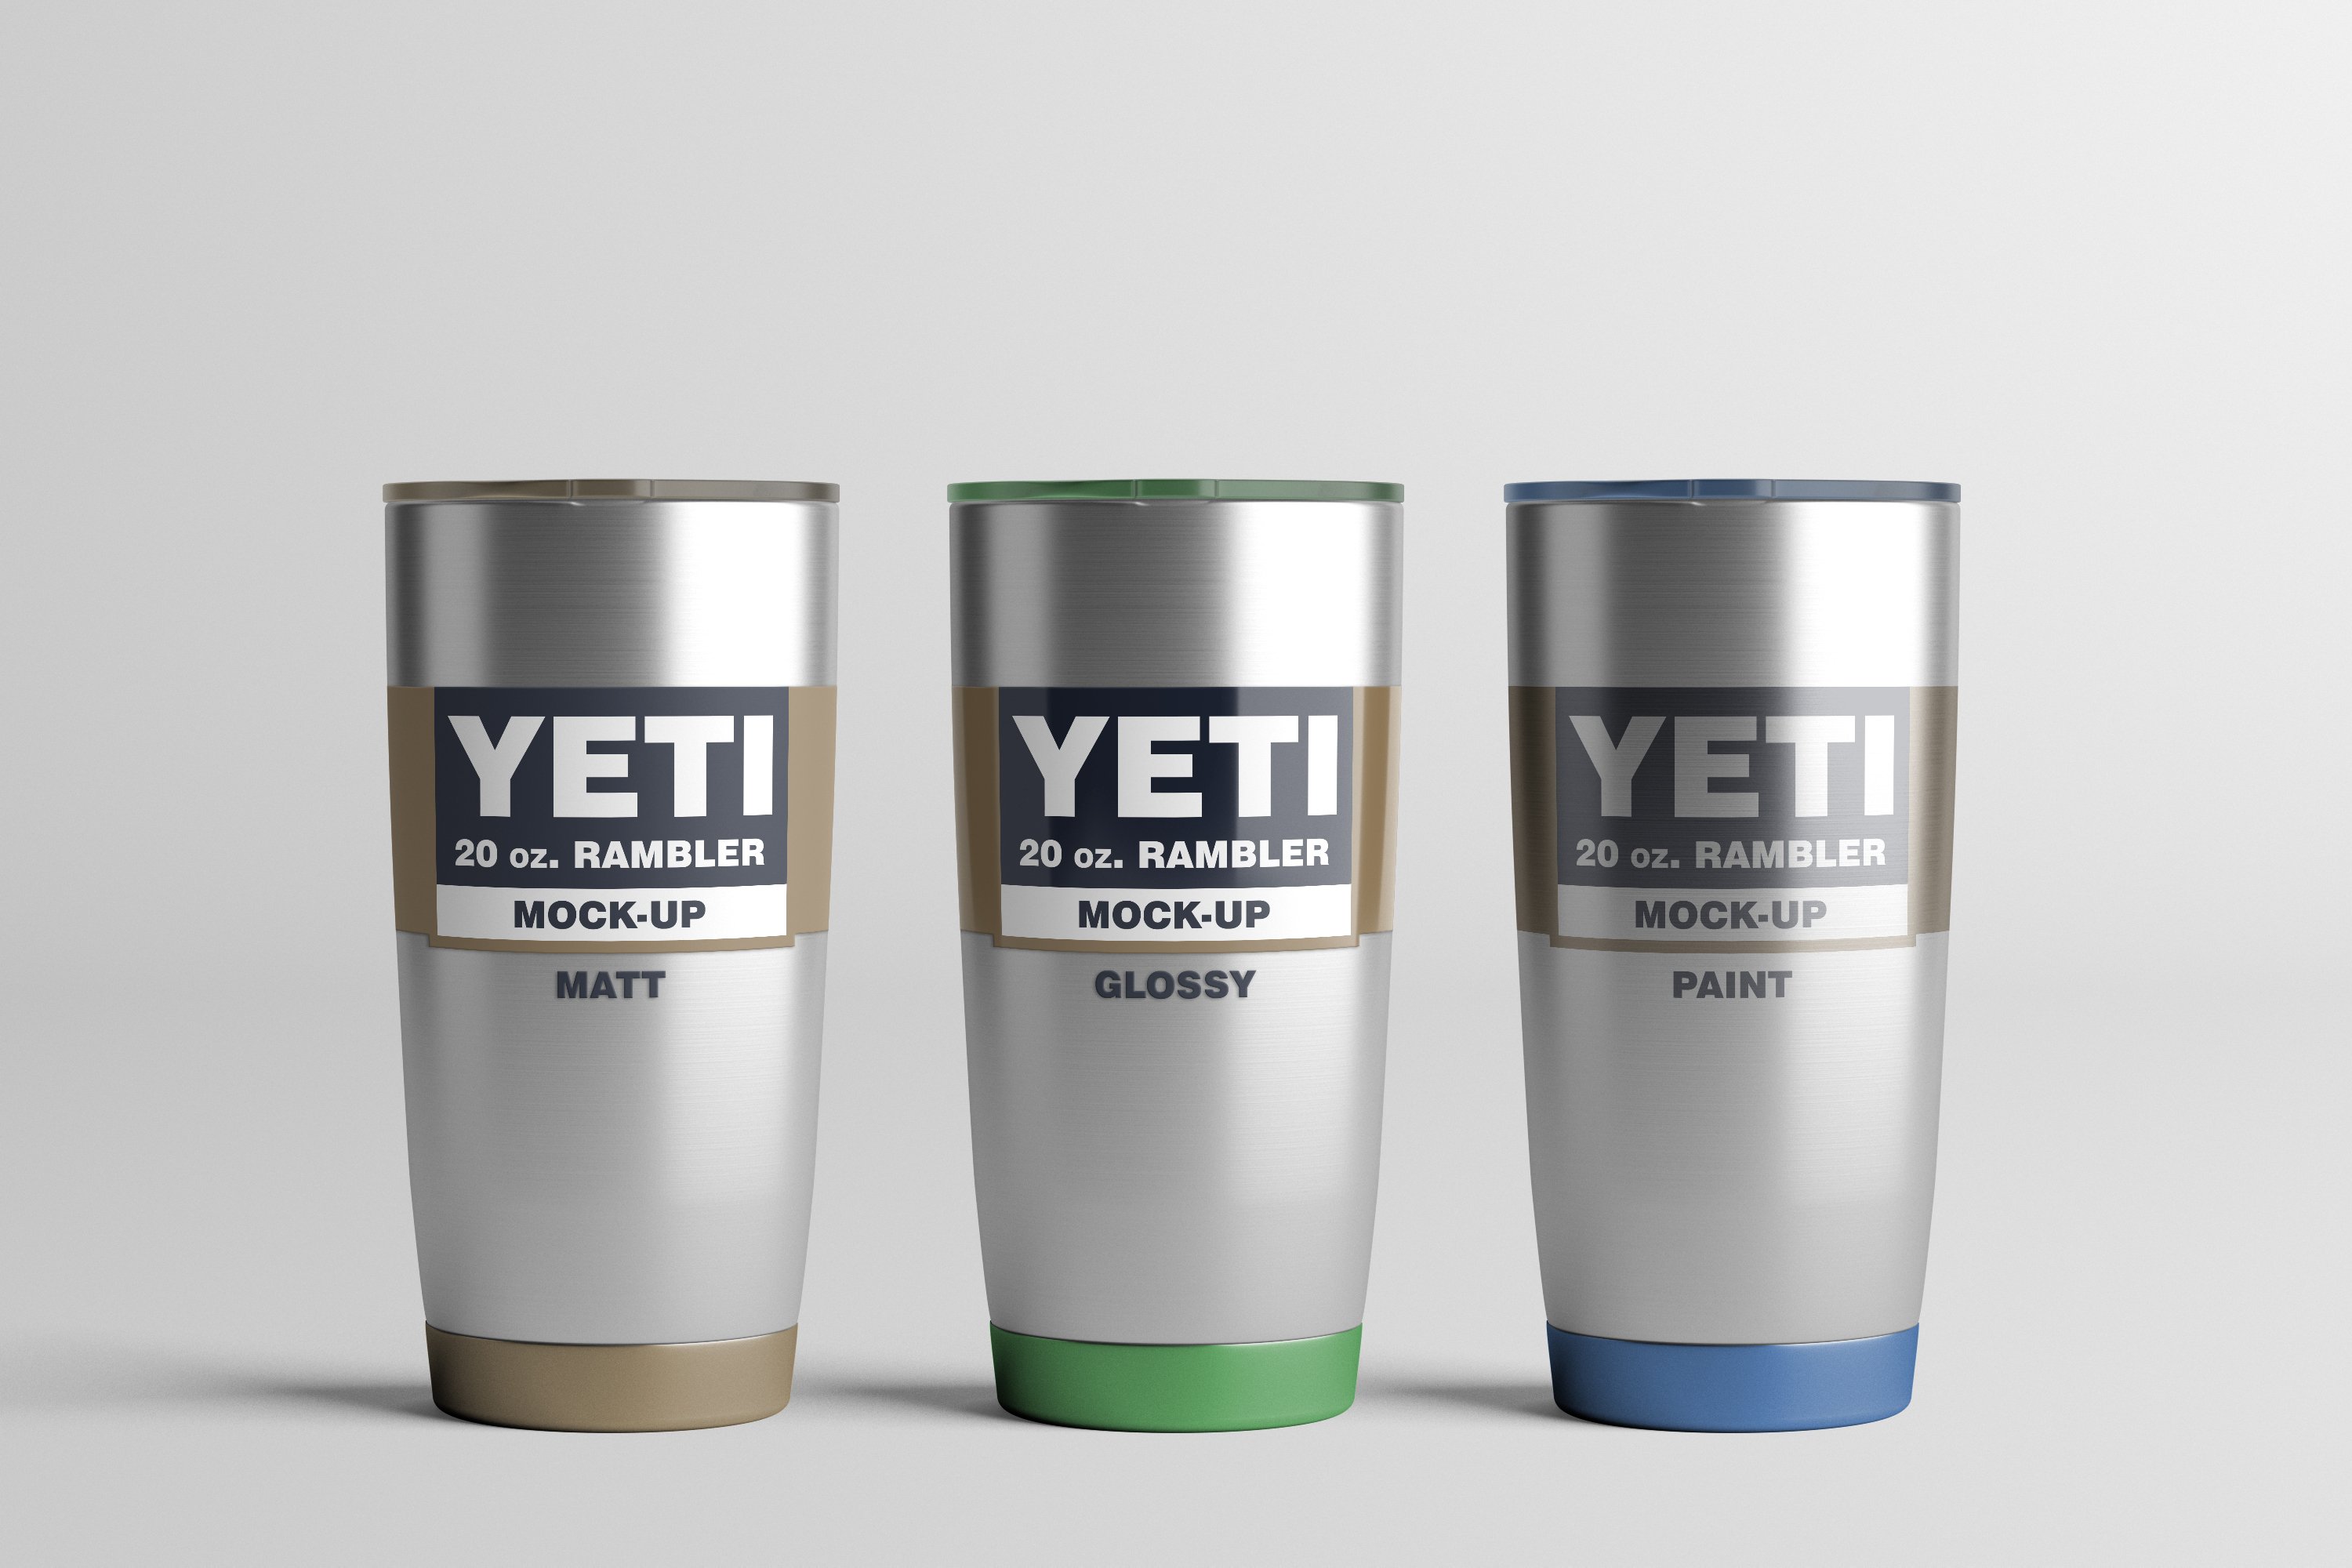 Three classic options of yeti cups.